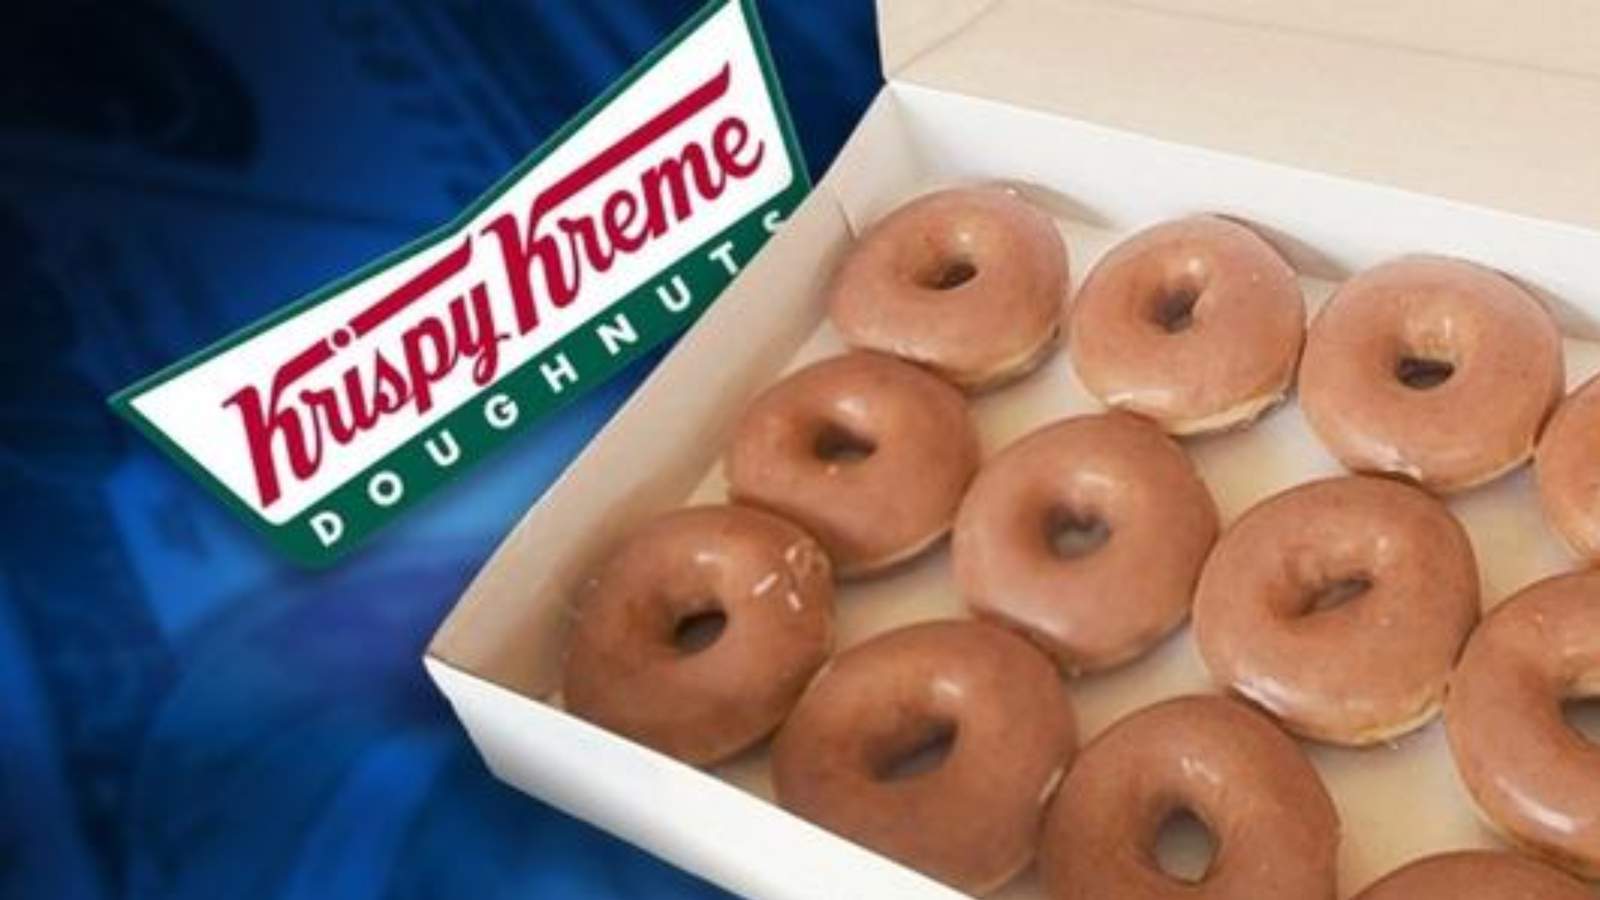 Krispy Kreme gives free donuts to healthcare workers amid coronavirus pandemic